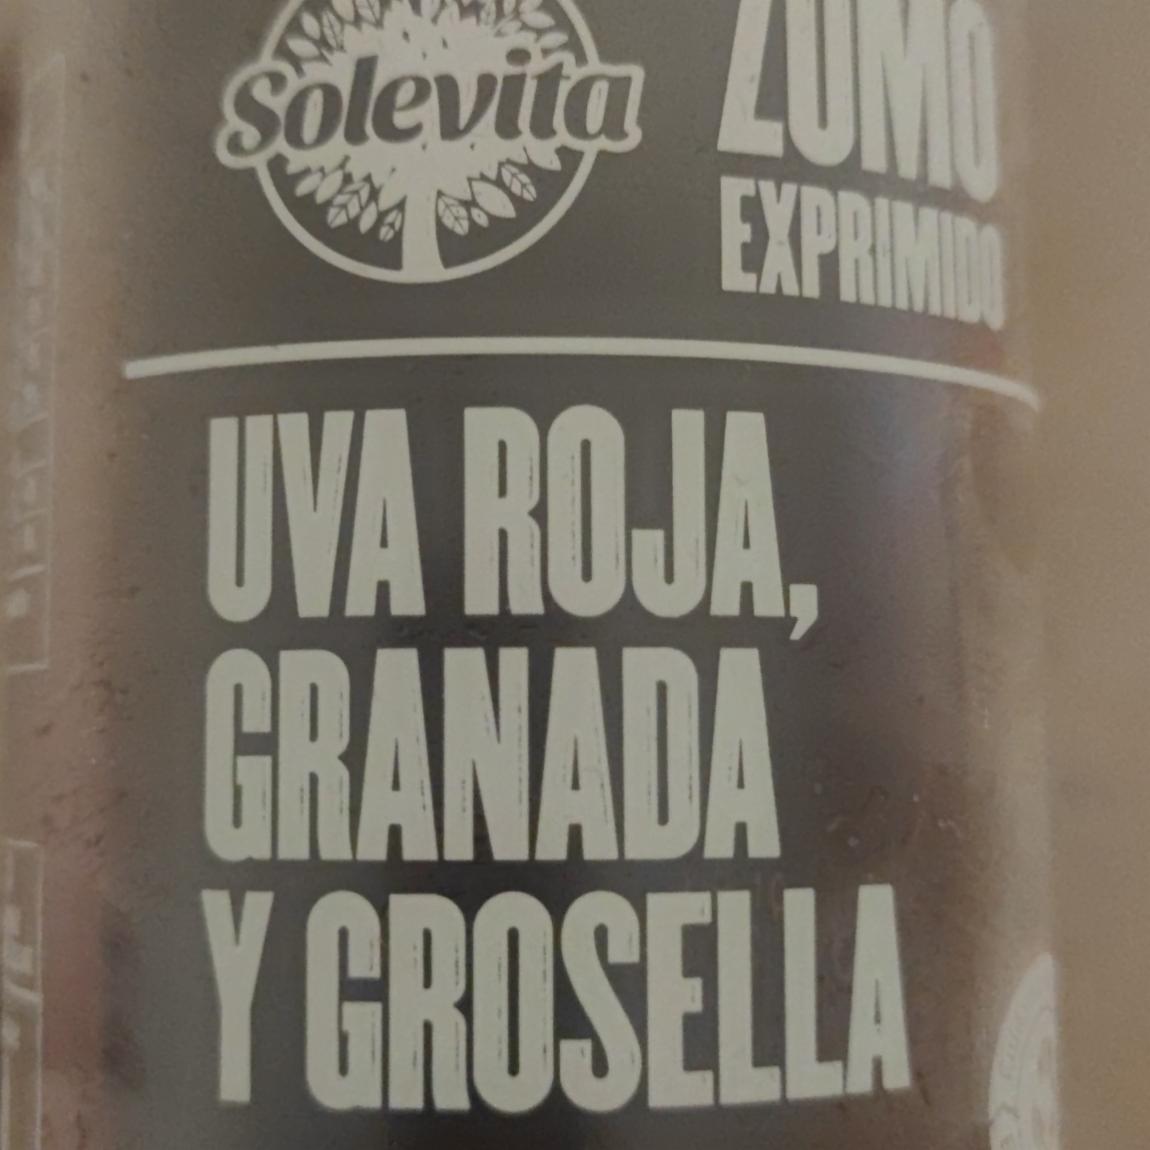 Fotografie - Uva roja, granada y grosella Solevita